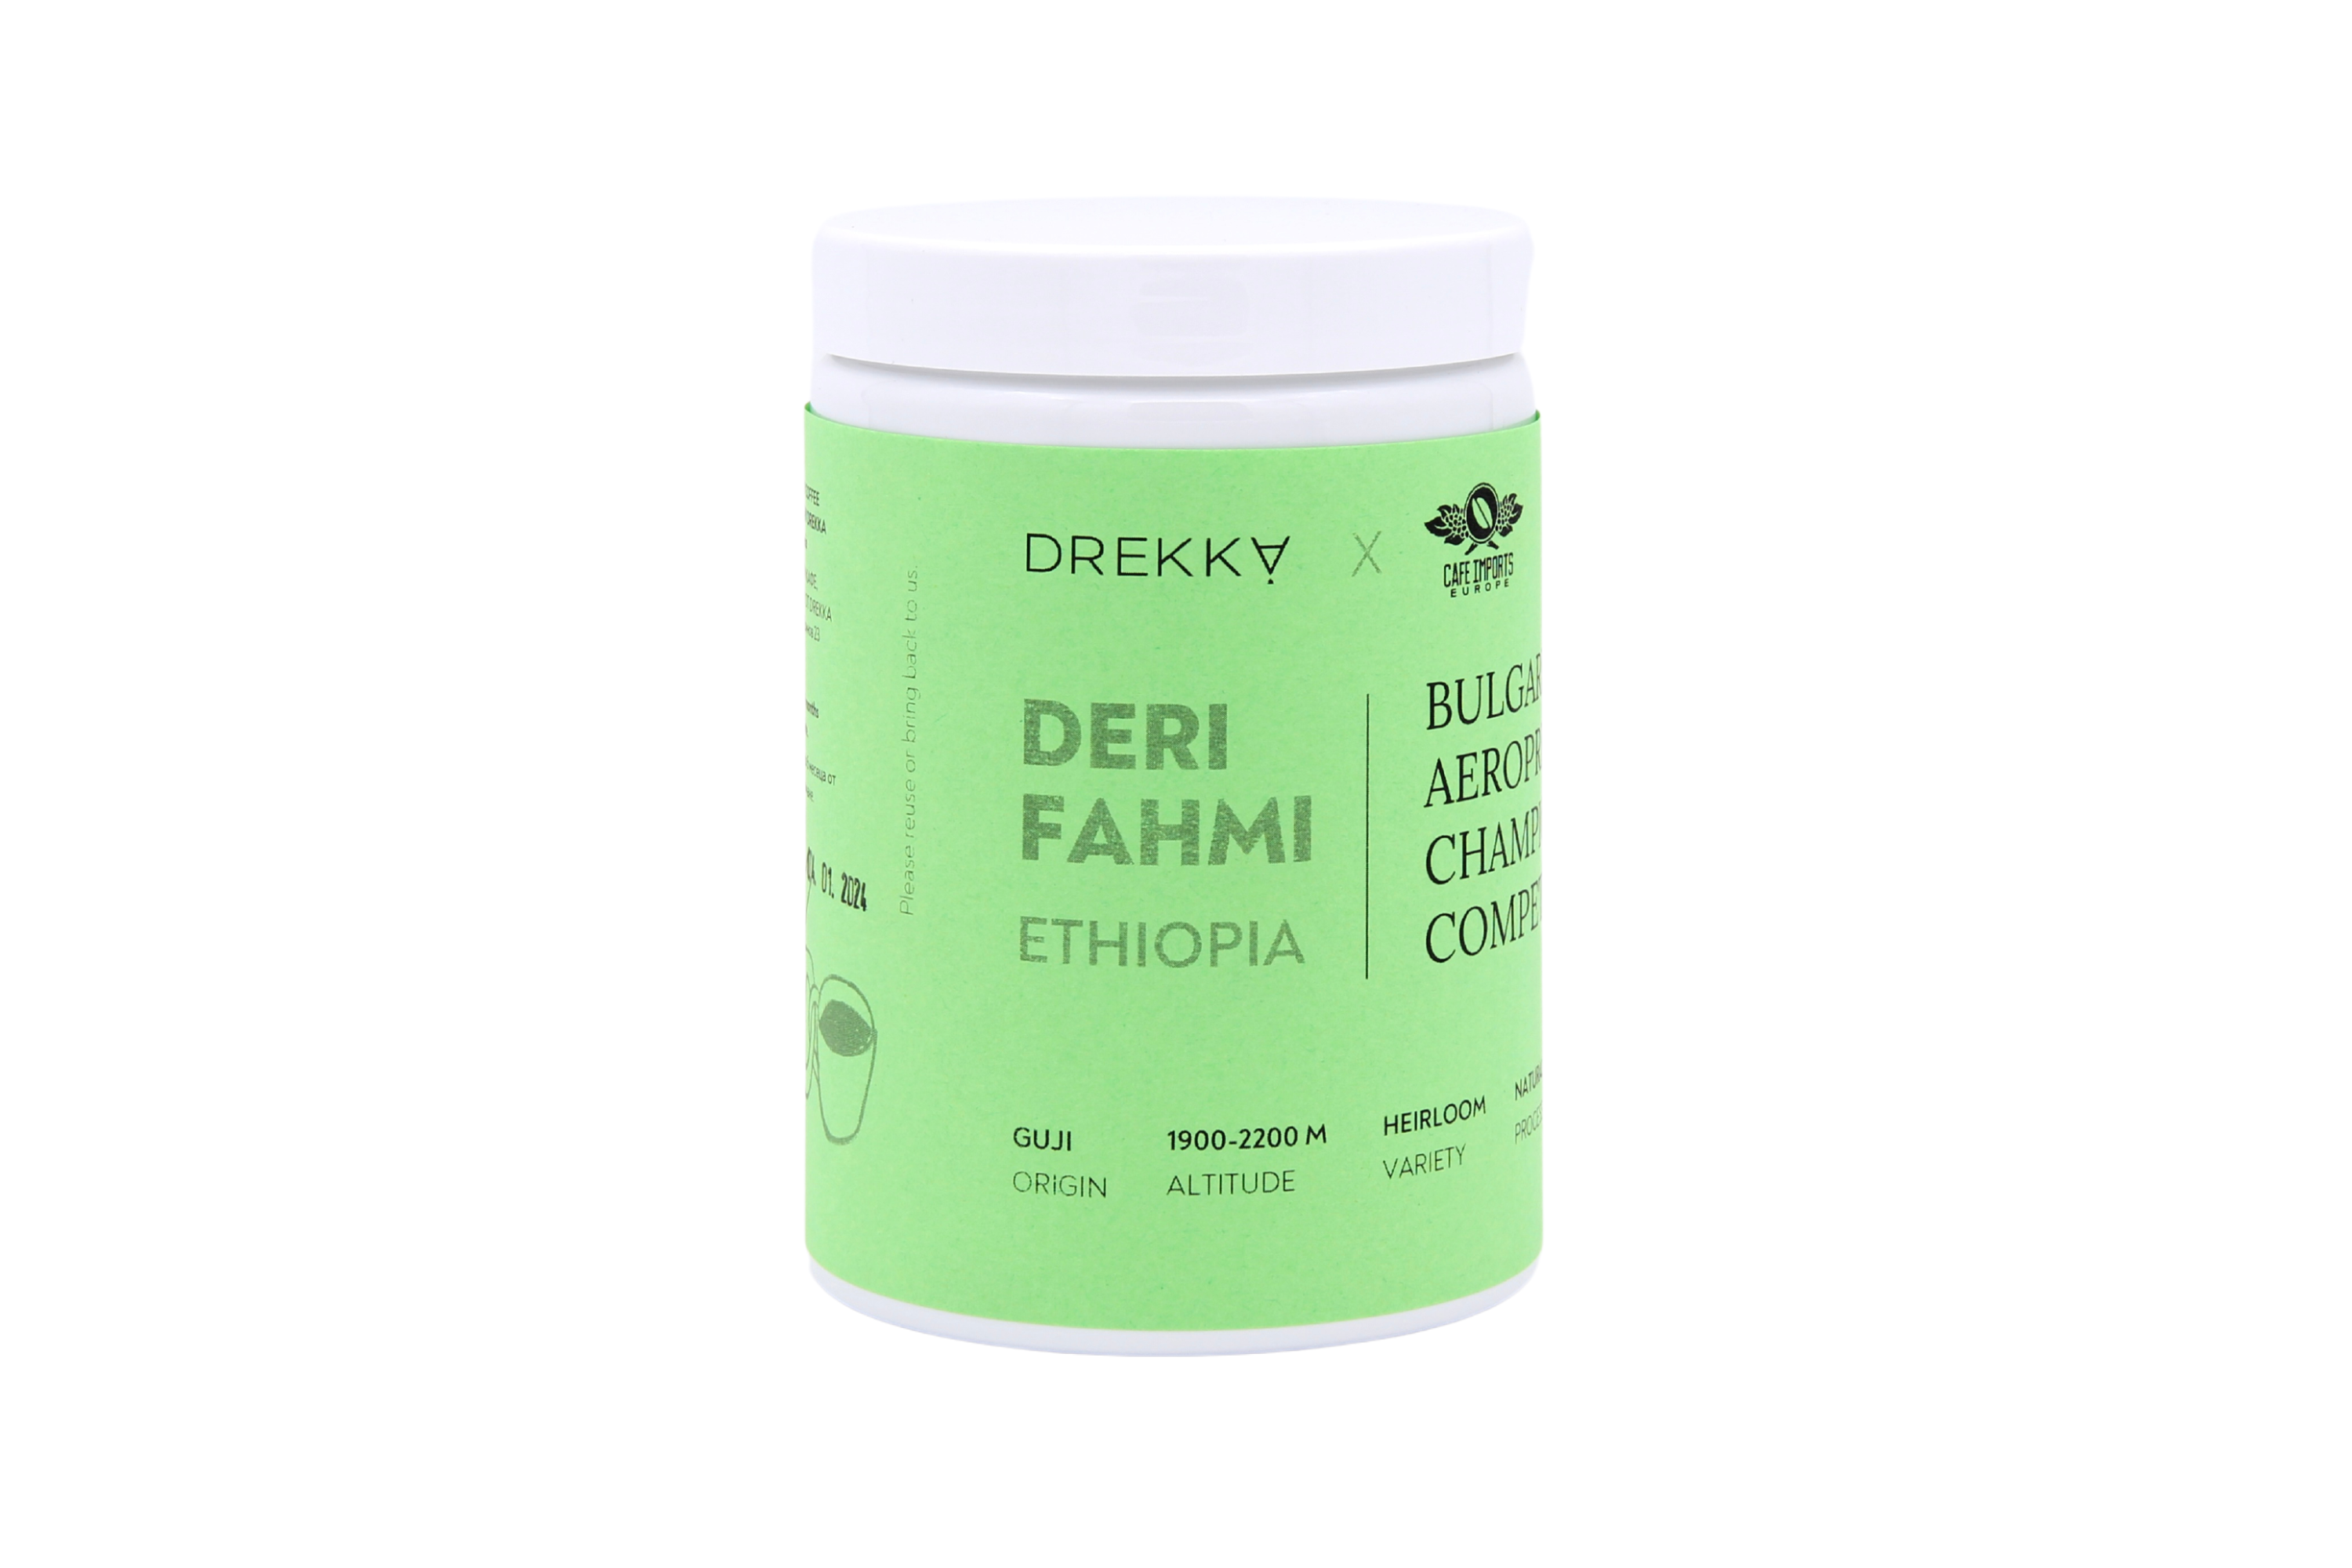 Deri Fahmi, Ethiopia / Competition coffee